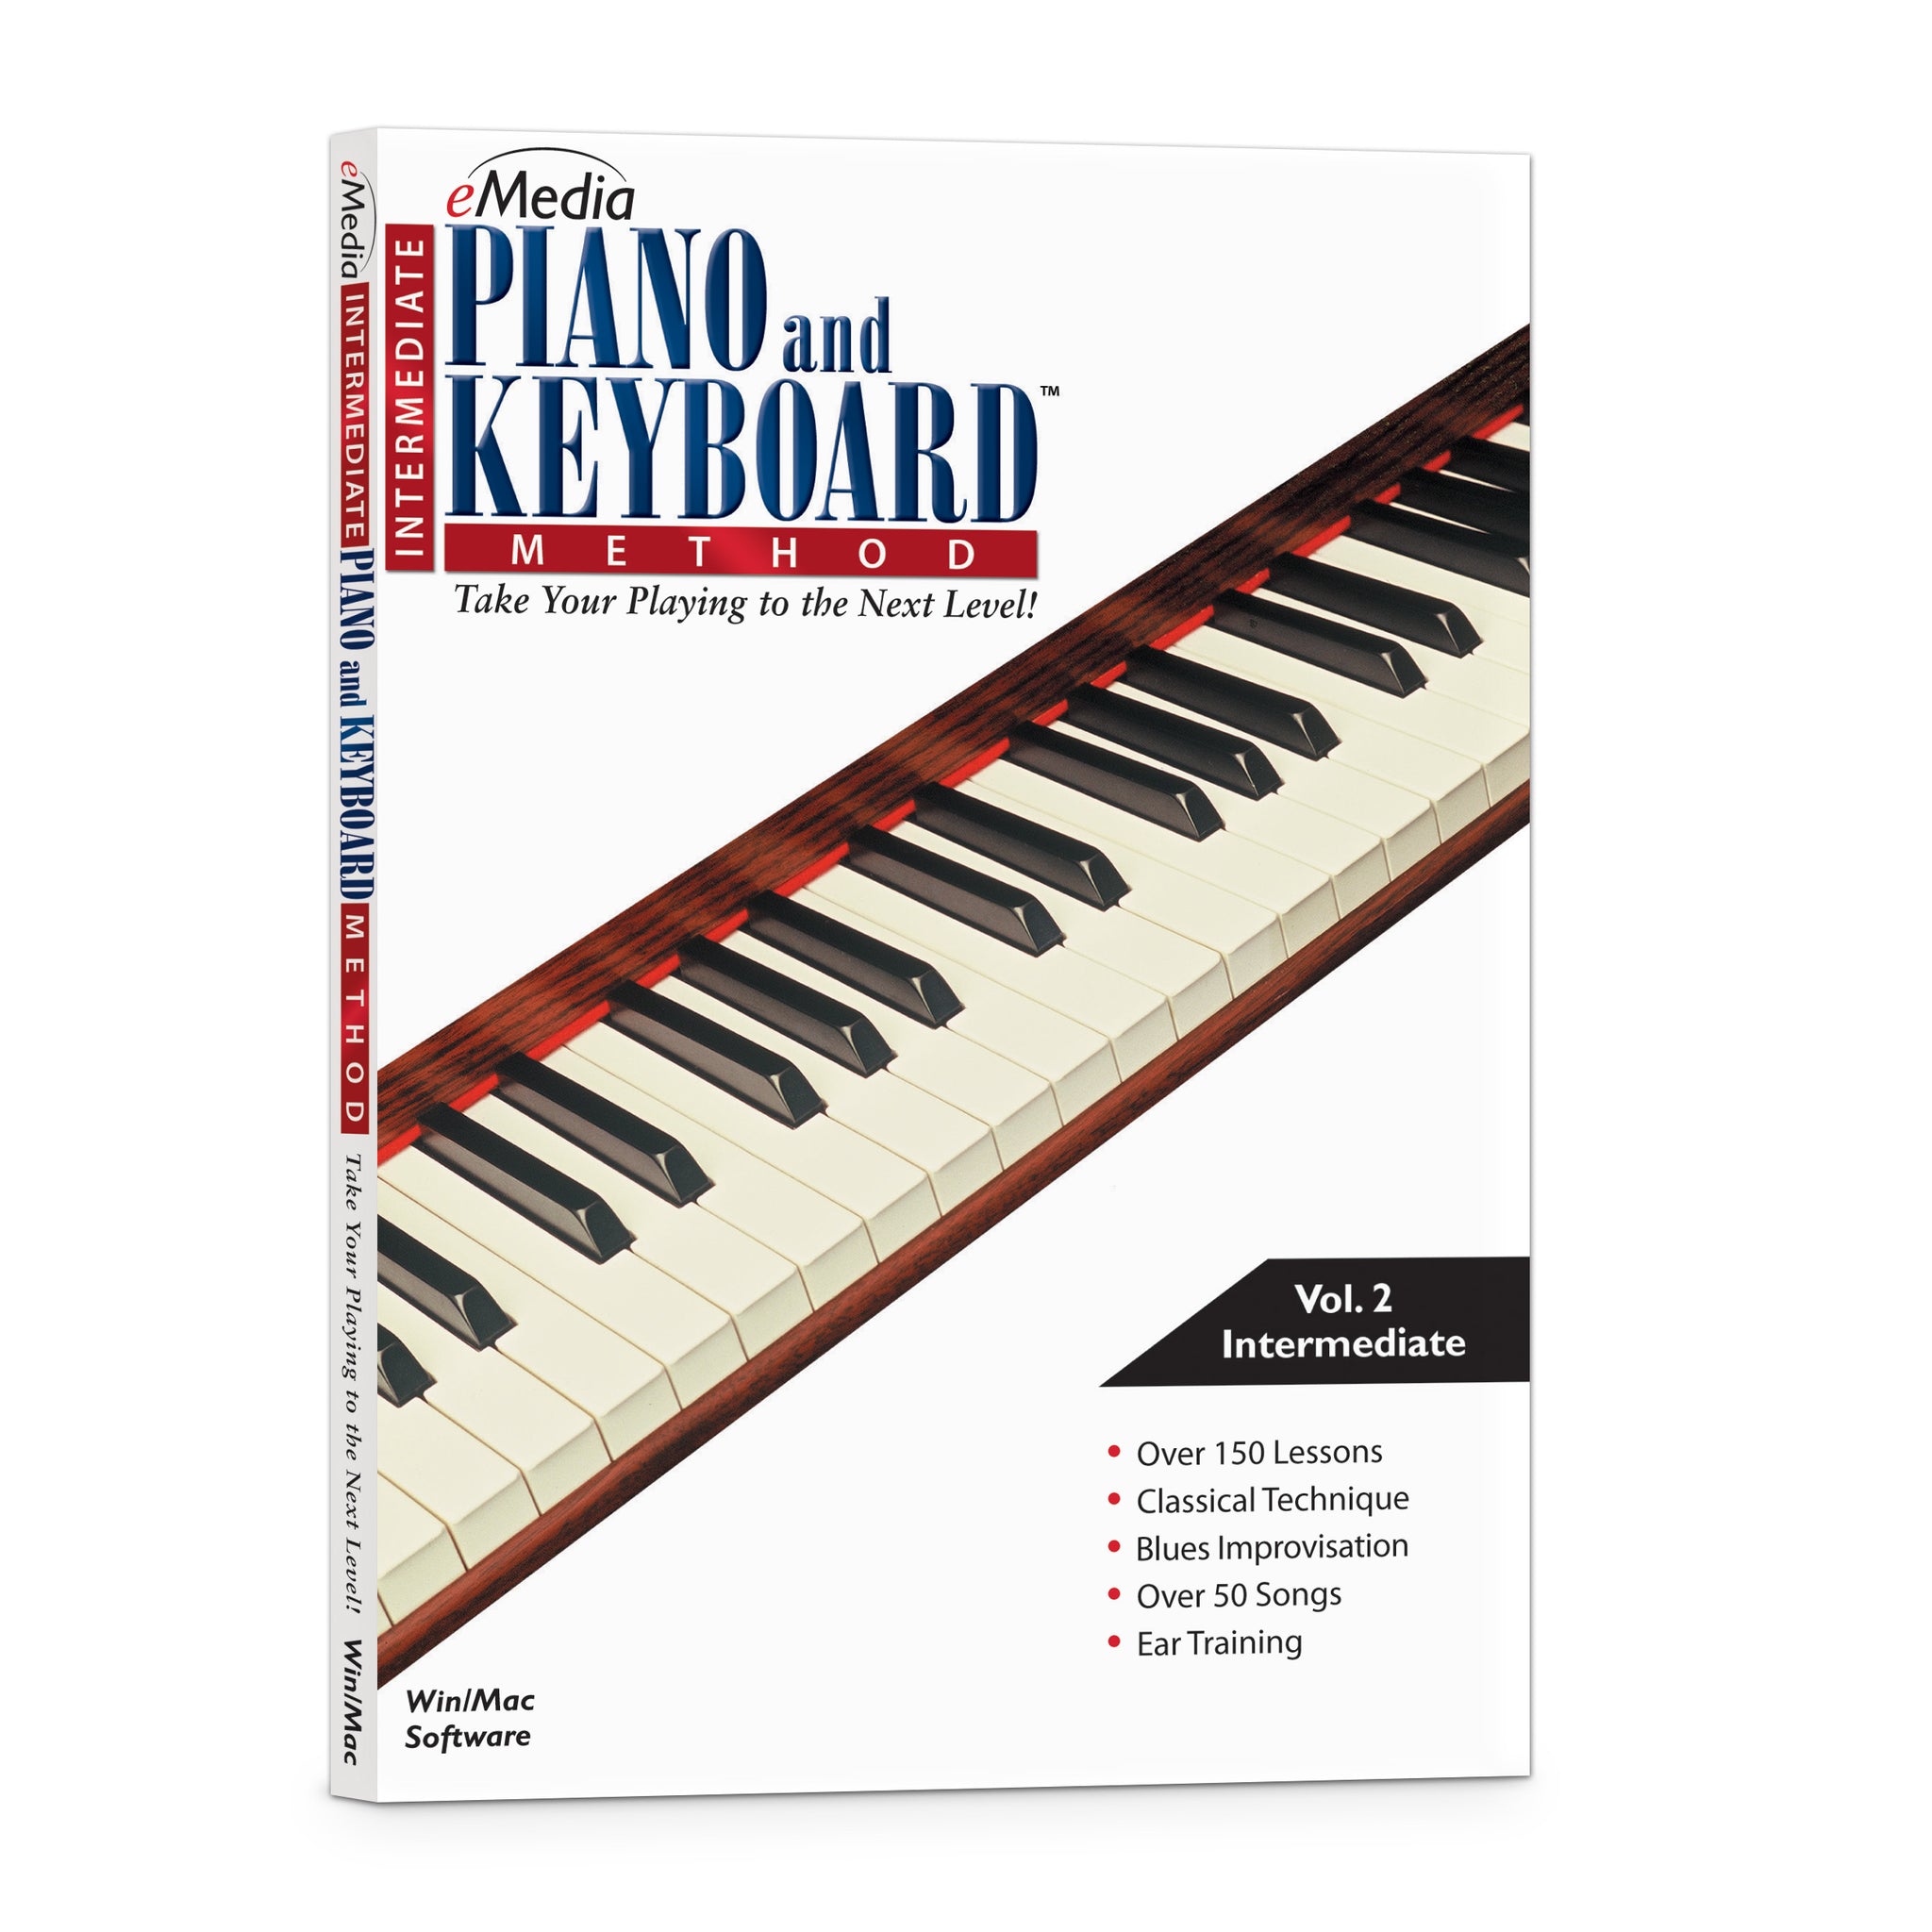 Get Piano Music Go 2019 : Free Piano Songs - Microsoft Store